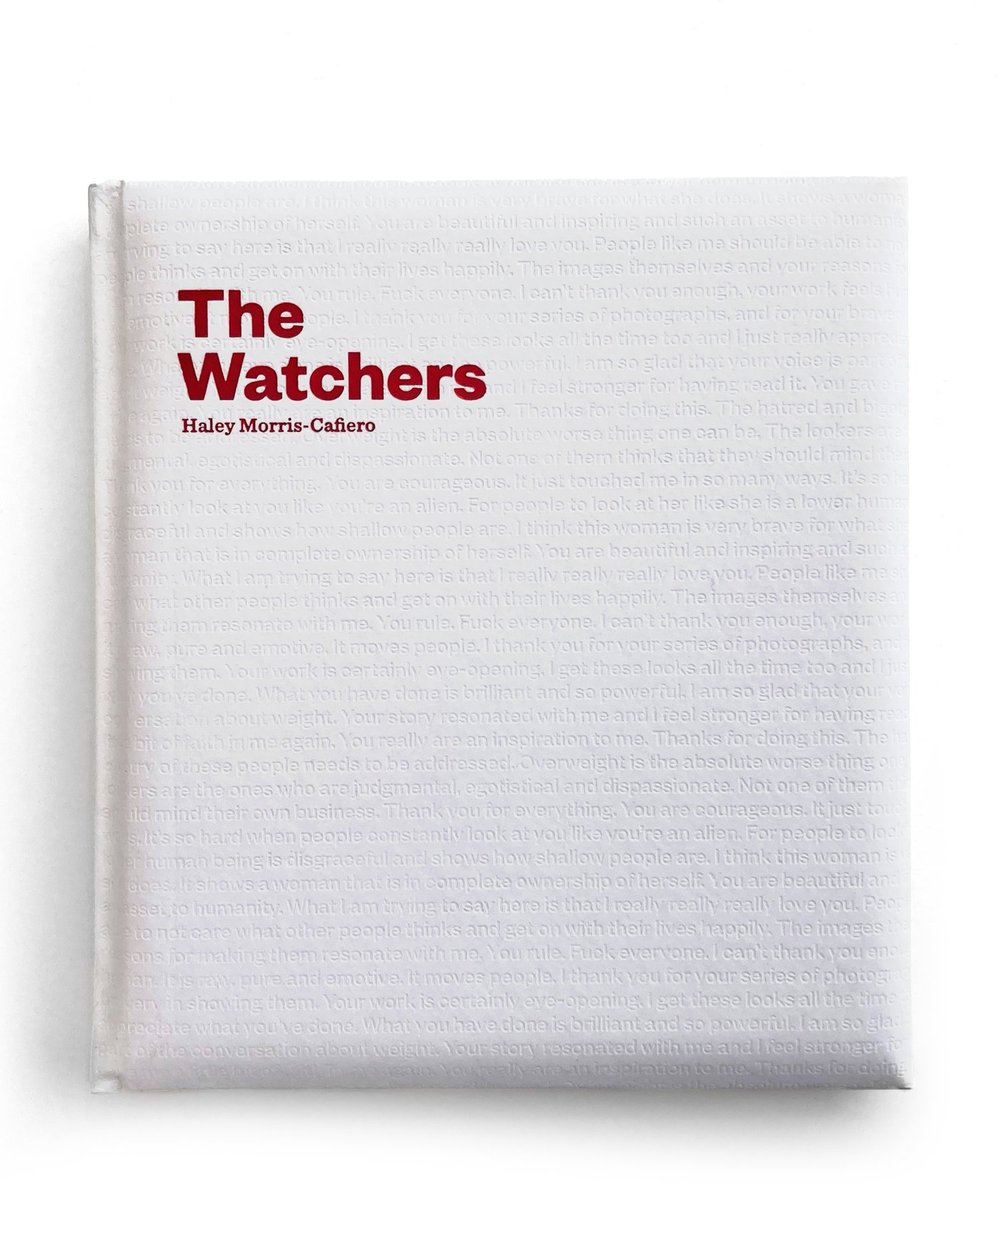 Haley+Morris-Cafiero+The+Watchers-cover+copy.jpg